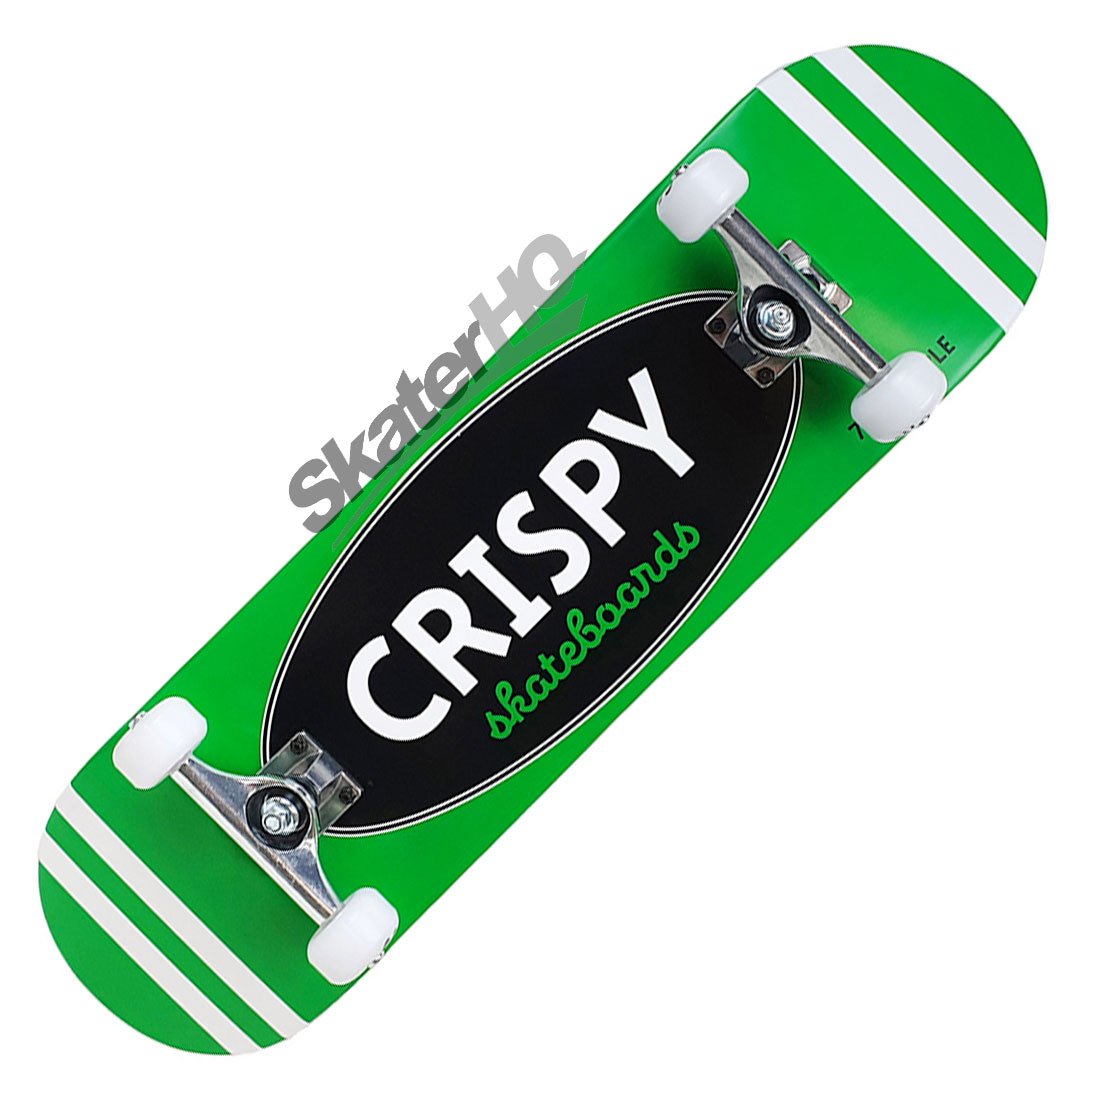 Crispy Rookie Stripes 8.125 Complete - Green Skateboard Completes Modern Street